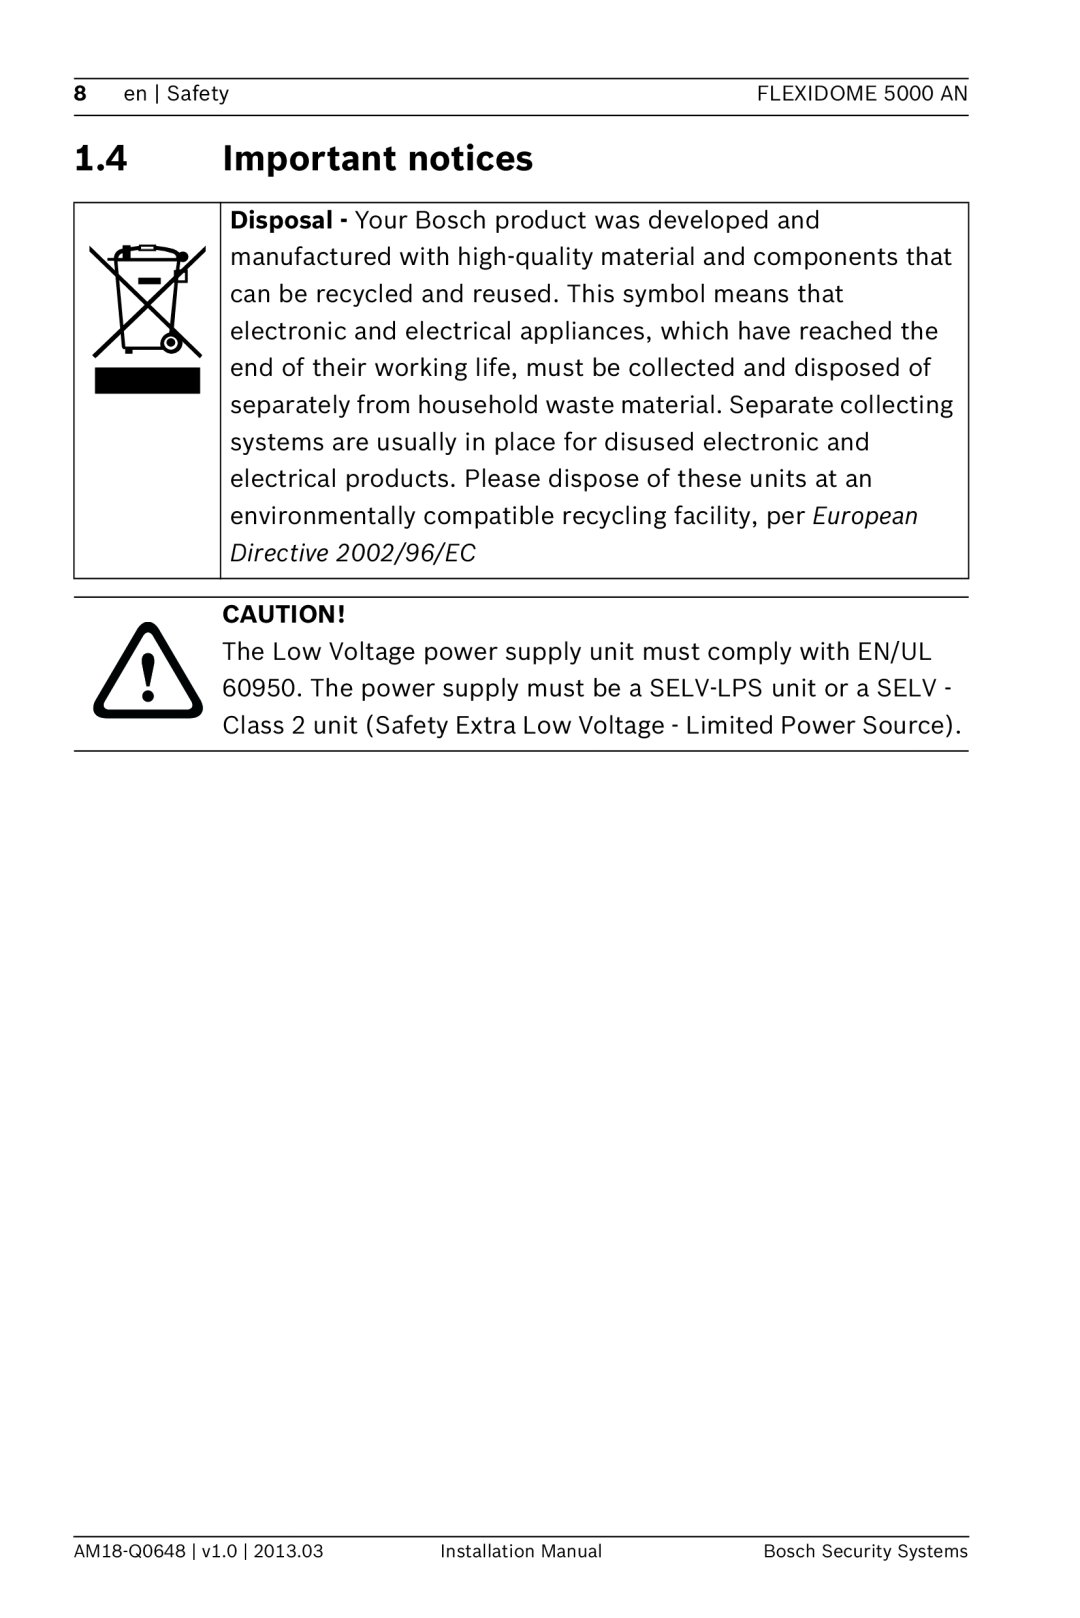 Bosch Appliances installation manual 1.4Important notices, en Safety, FLEXIDOME 5000 AN 